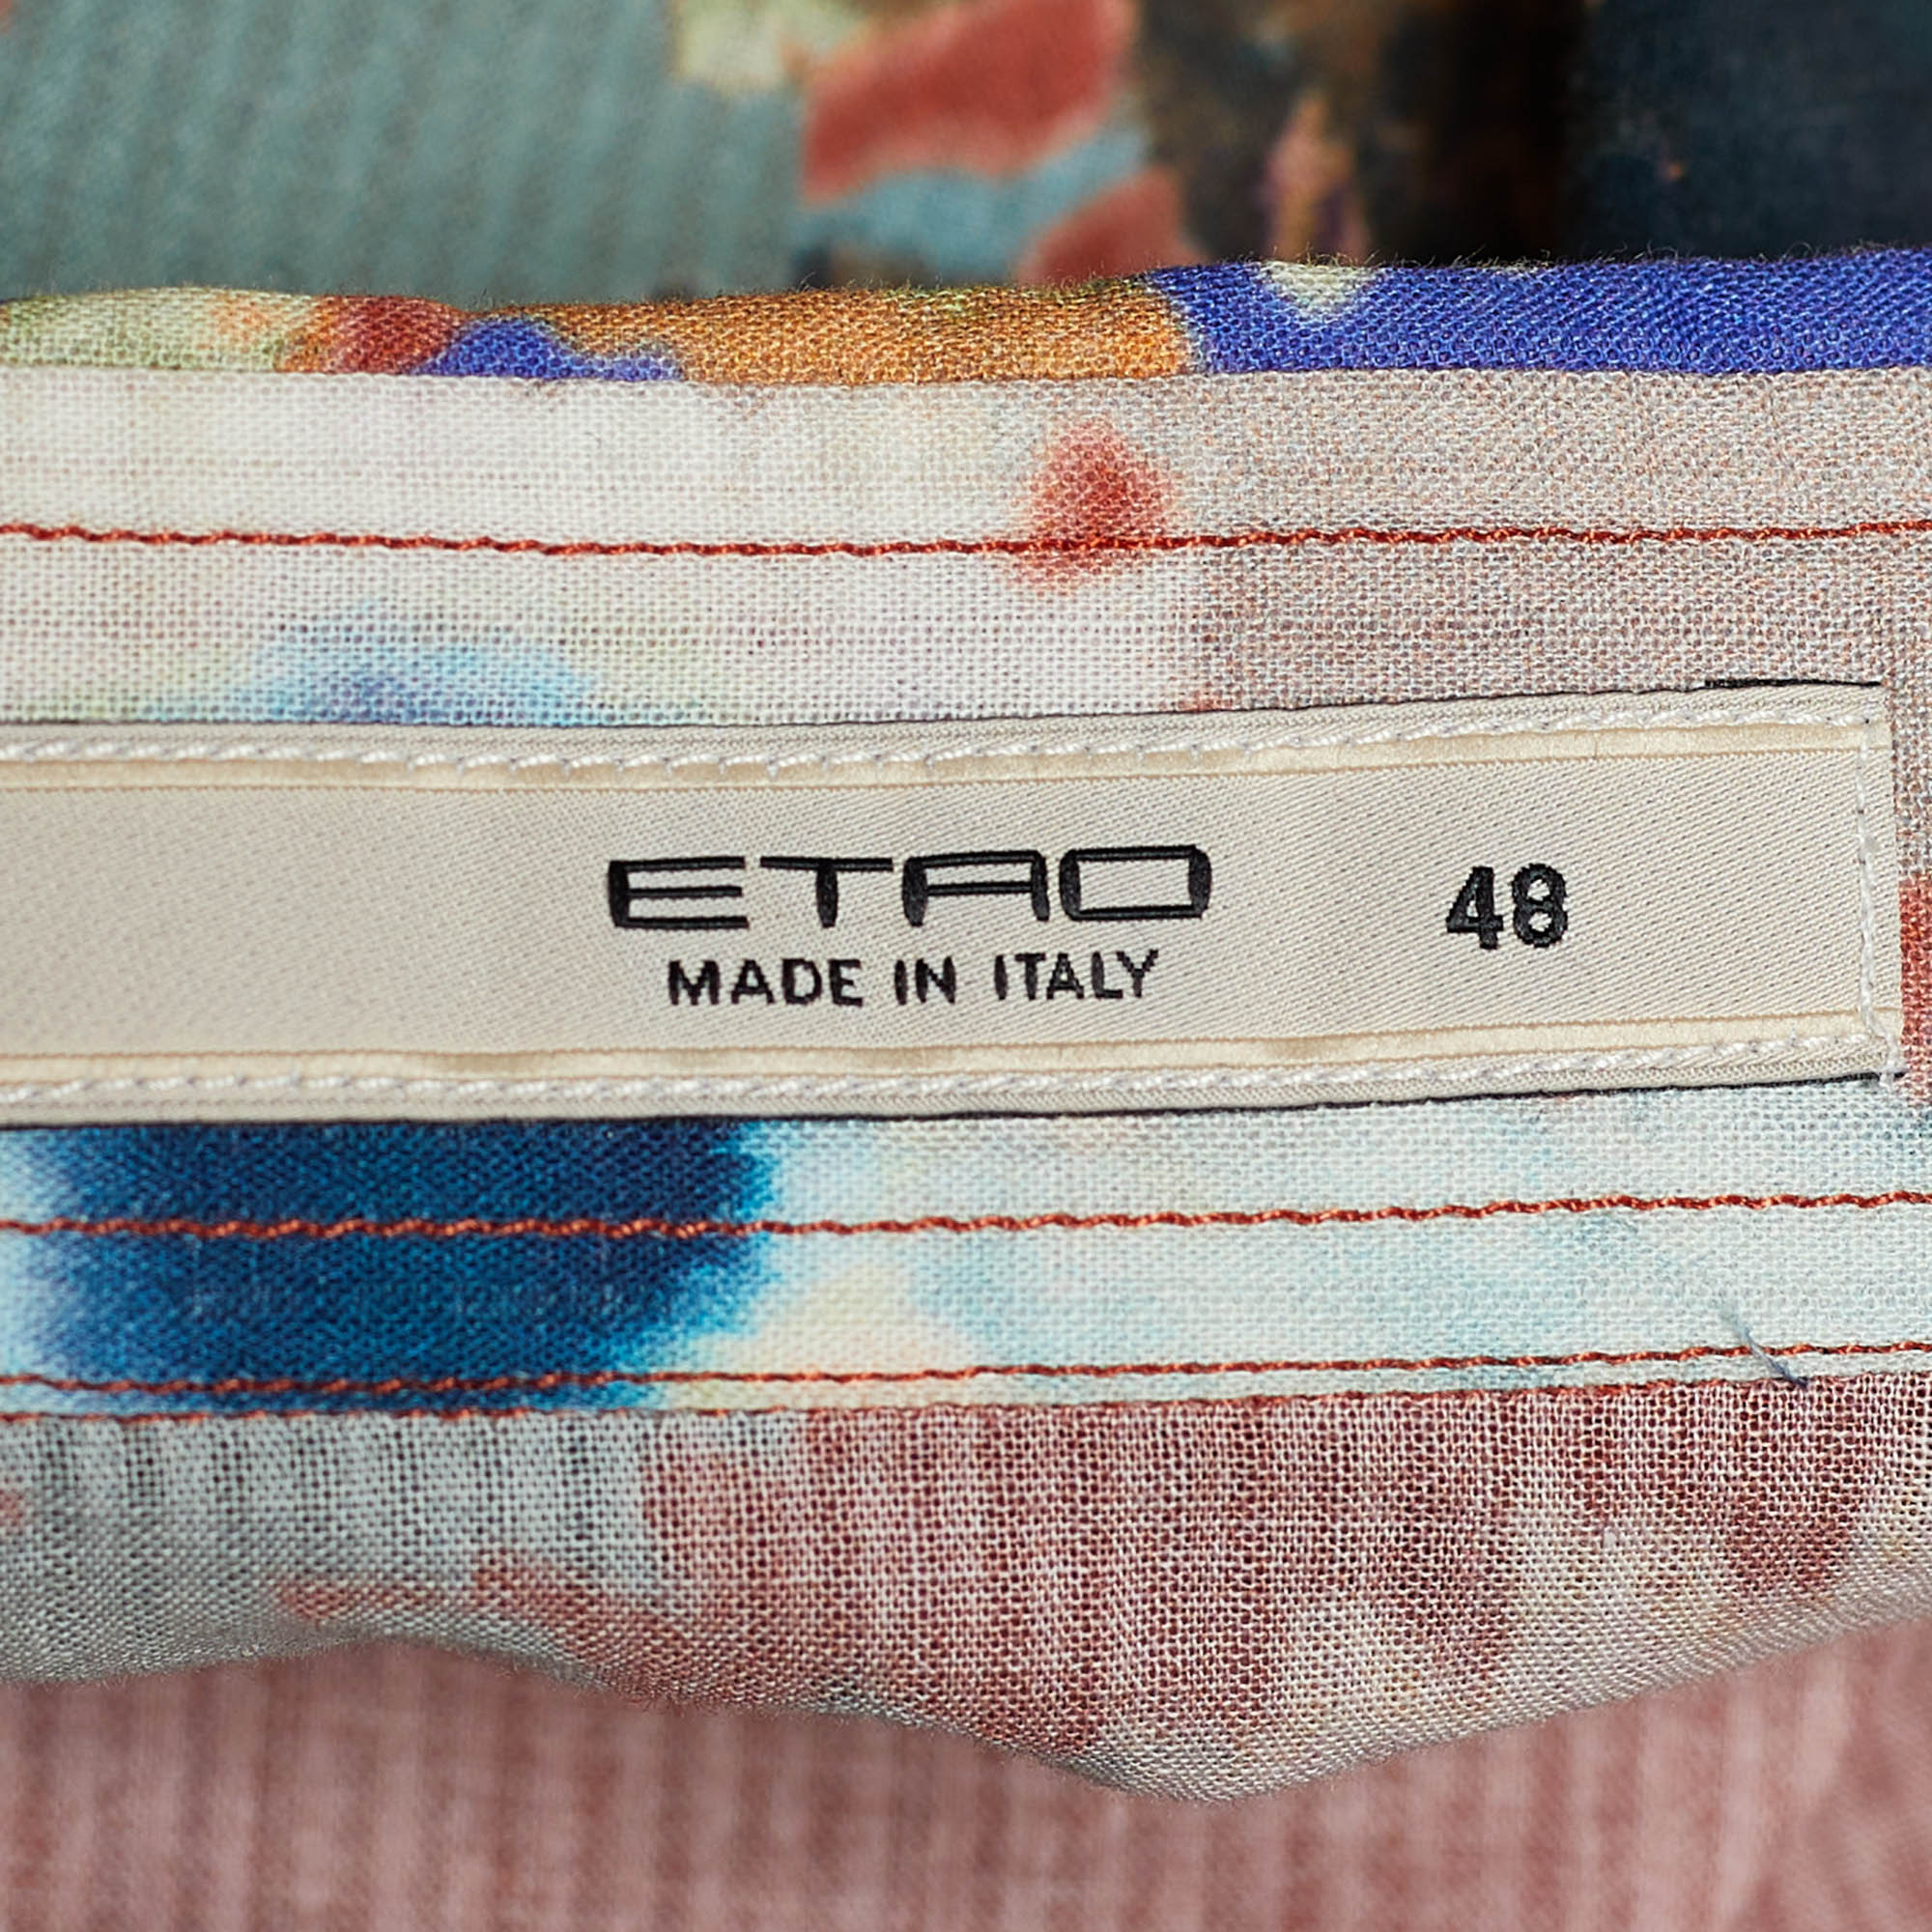 Etro Multicolor Floral Printed Cotton Long Sleeve Button Front Shirt L